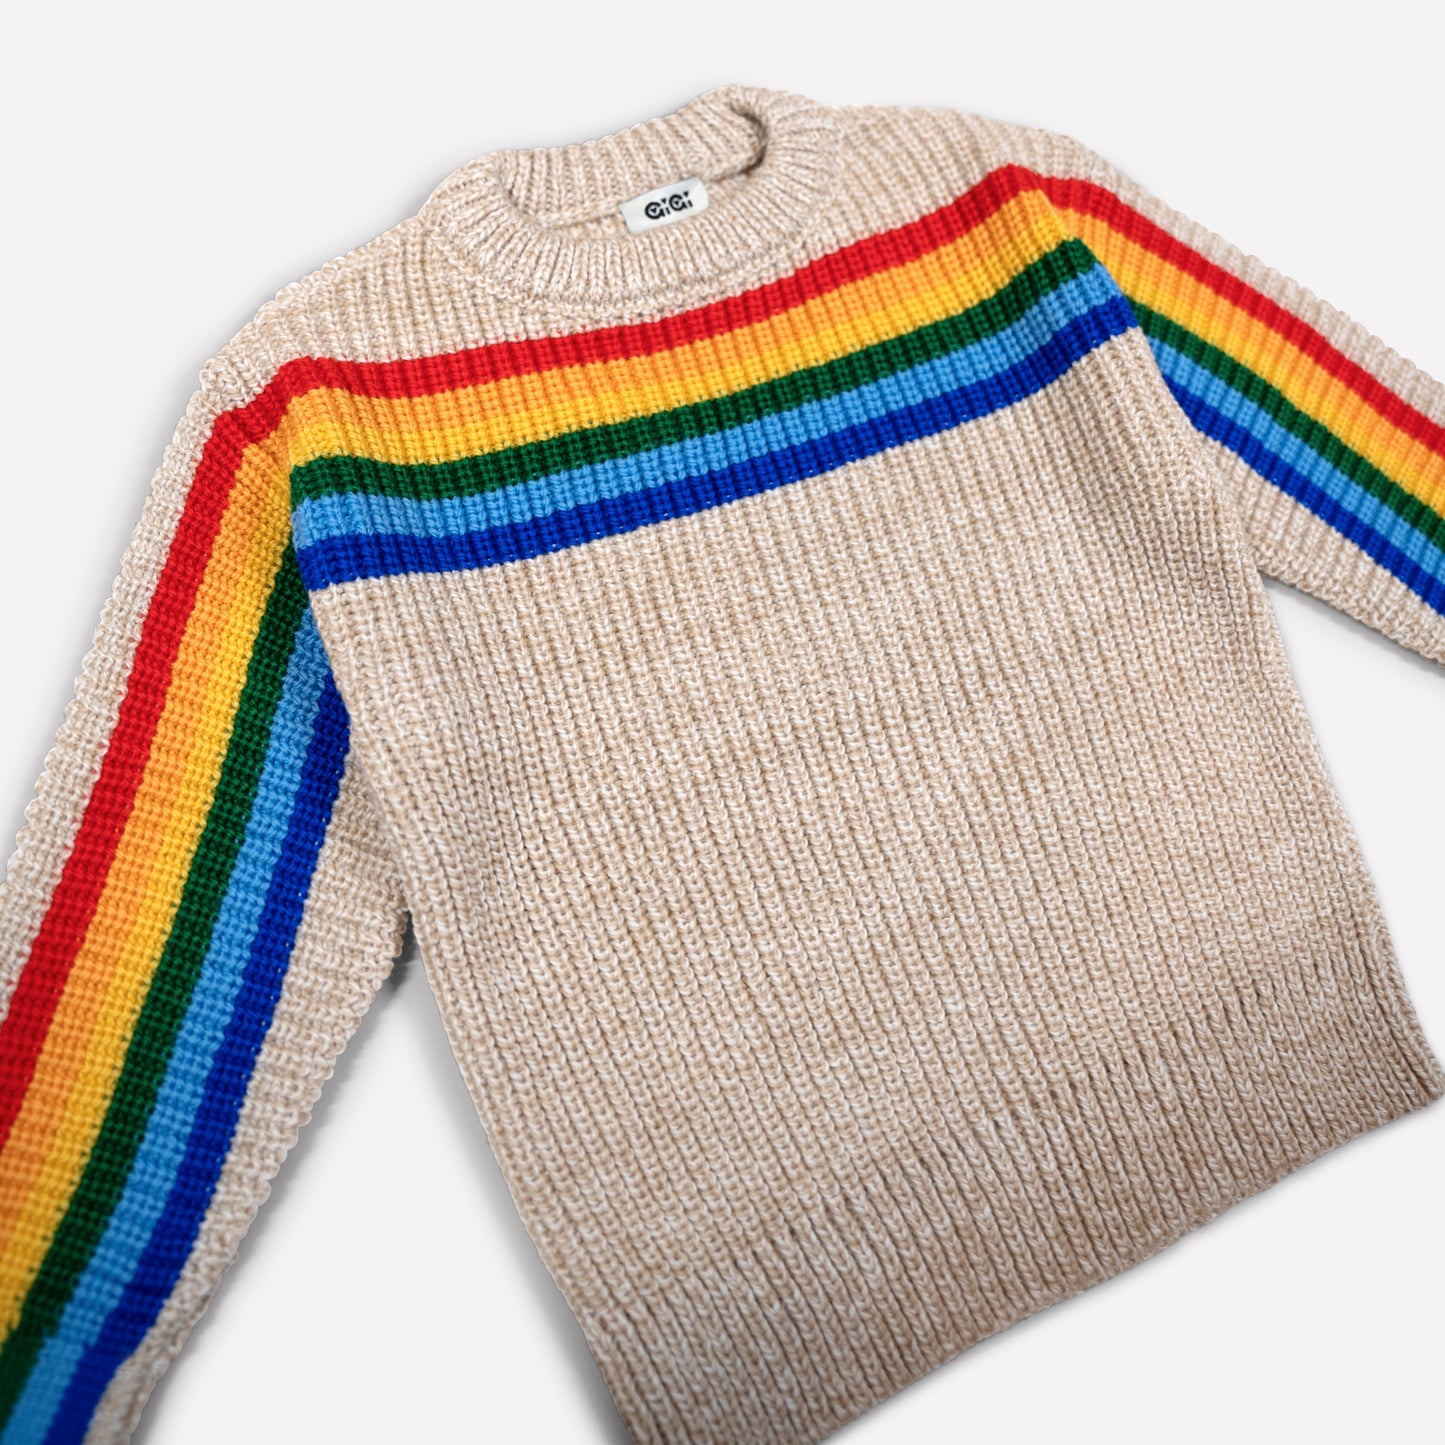 Rainbow Sweater Mini in Beige Multi